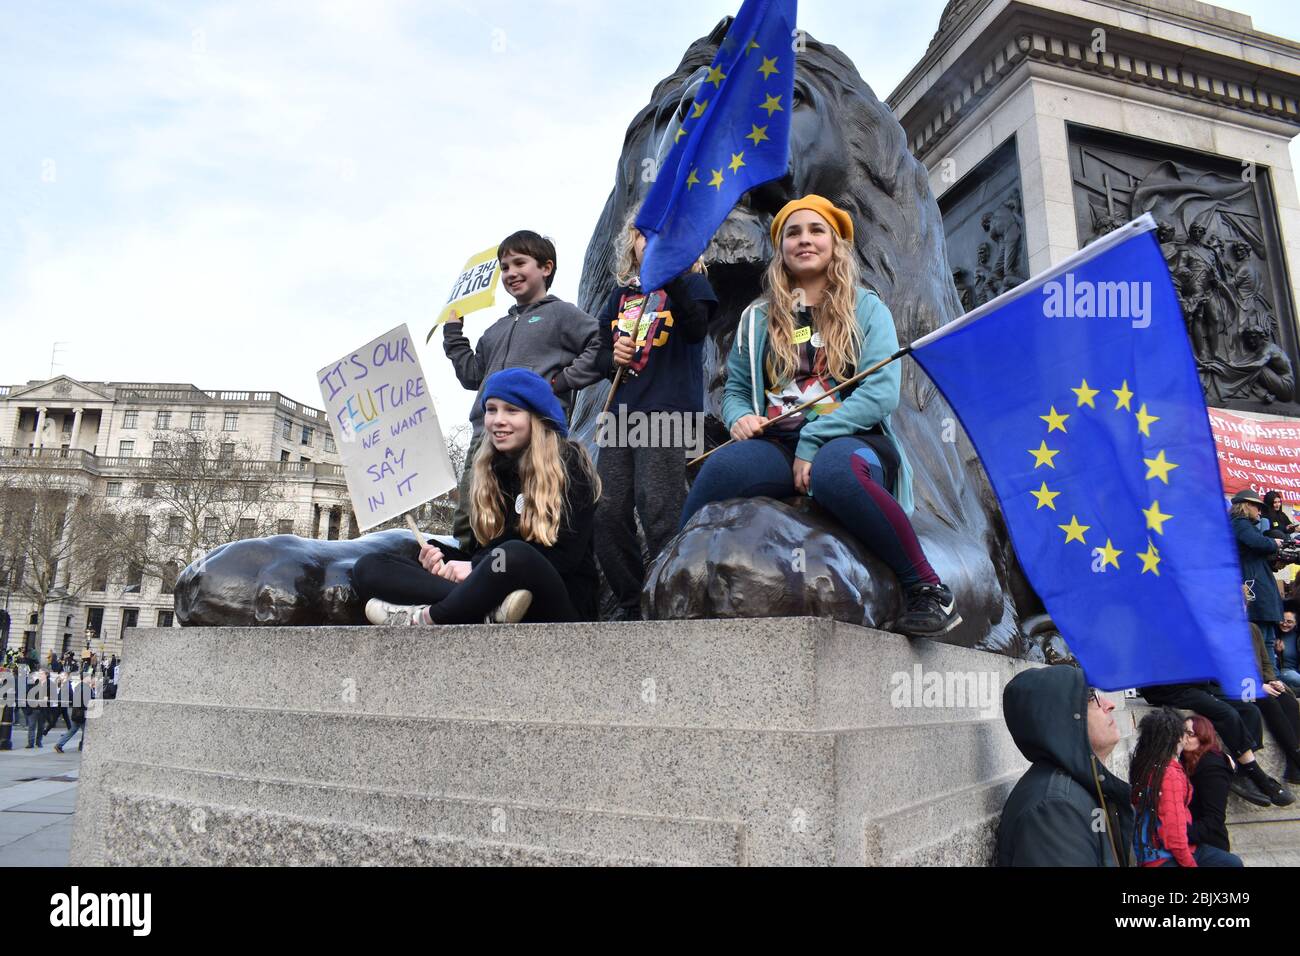 Children at Brexit demonstration Trafalgar square London u.k. Stock Photo